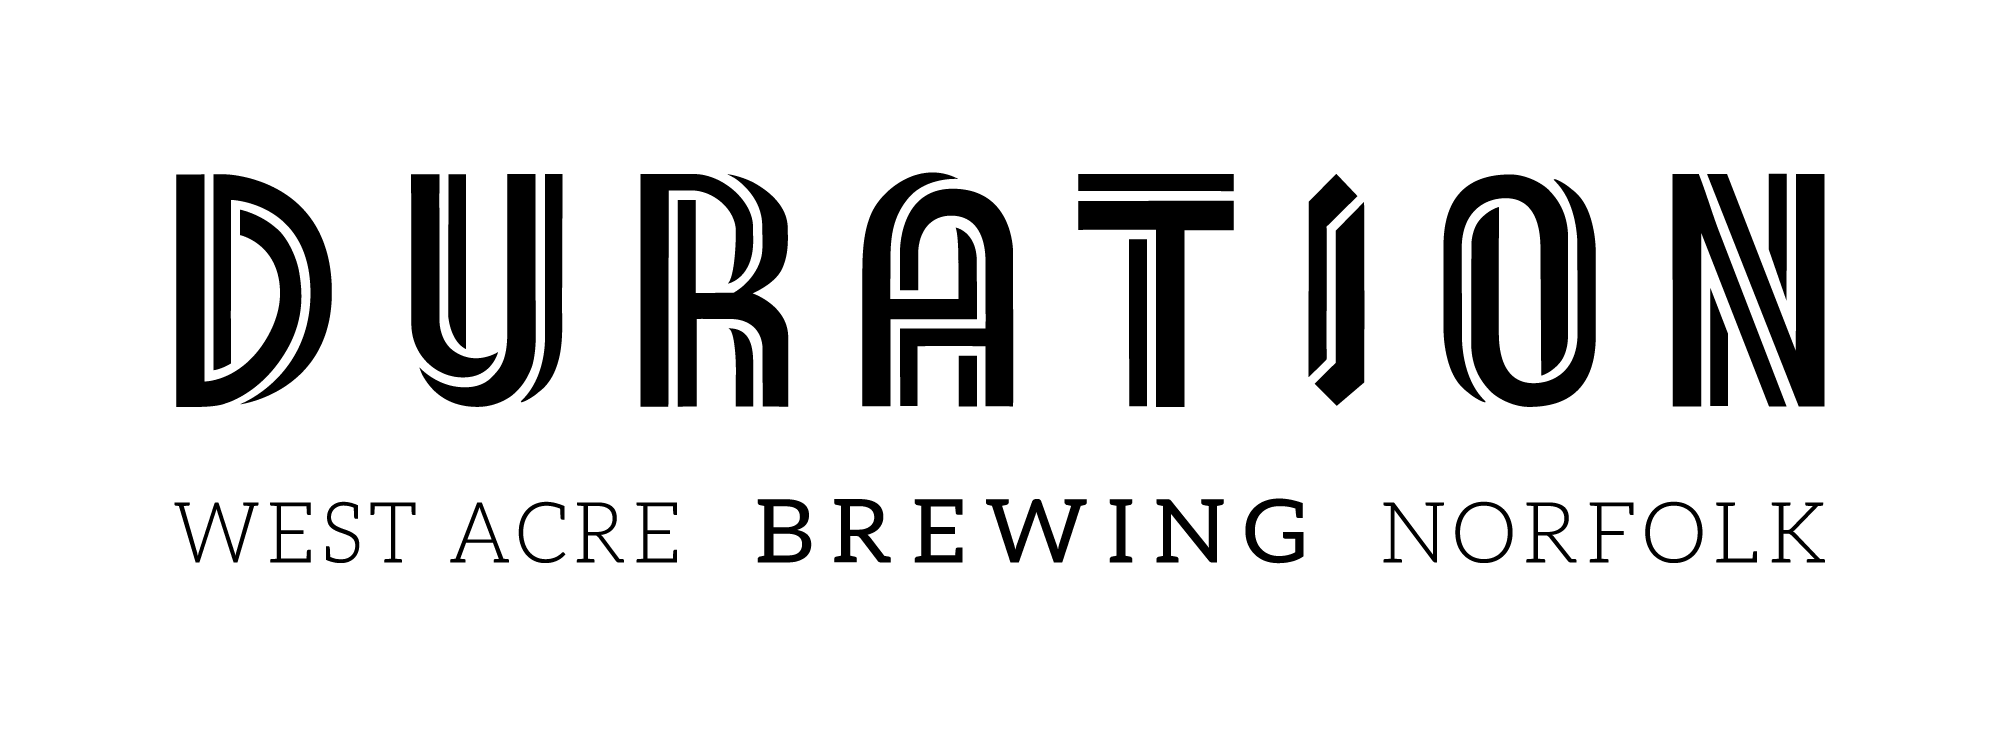 logo for Duration Brewing Ltd